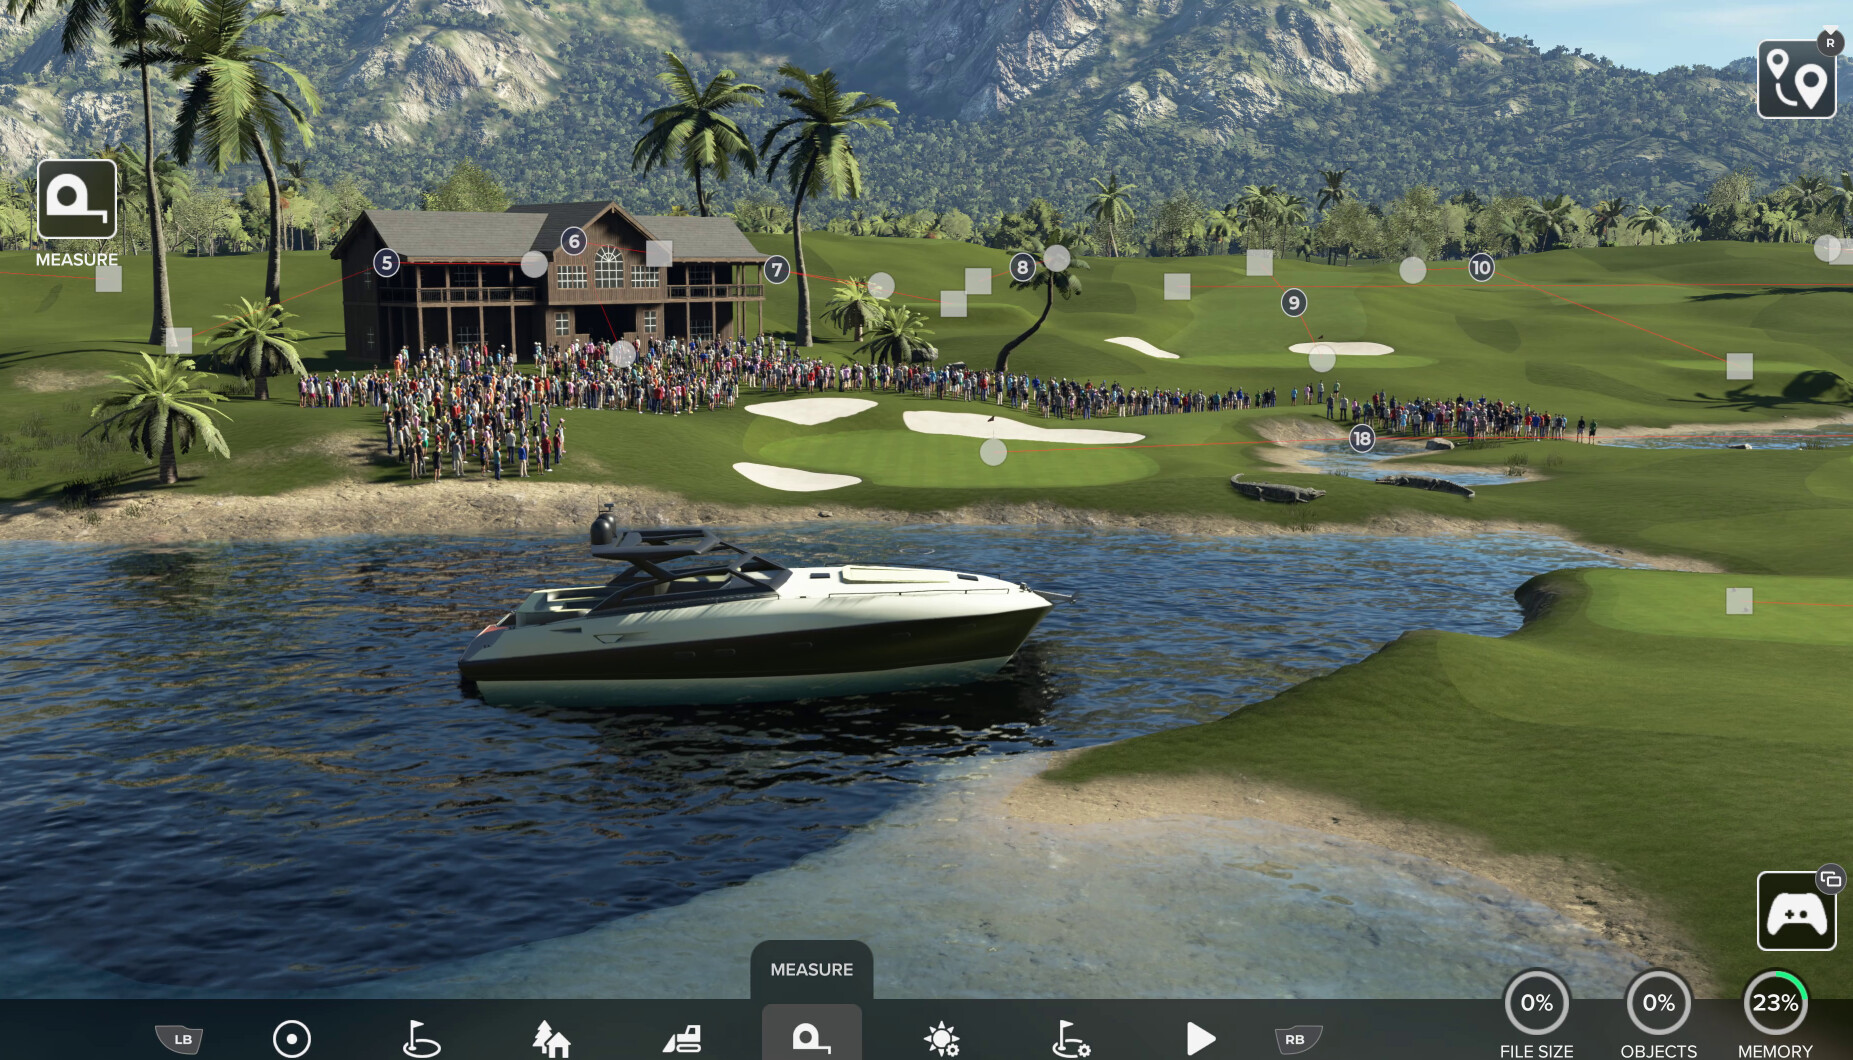 PGA TOUR 2K23 Tiger Woods Edition EU XBOX One / Xbox Series X,S CD Key